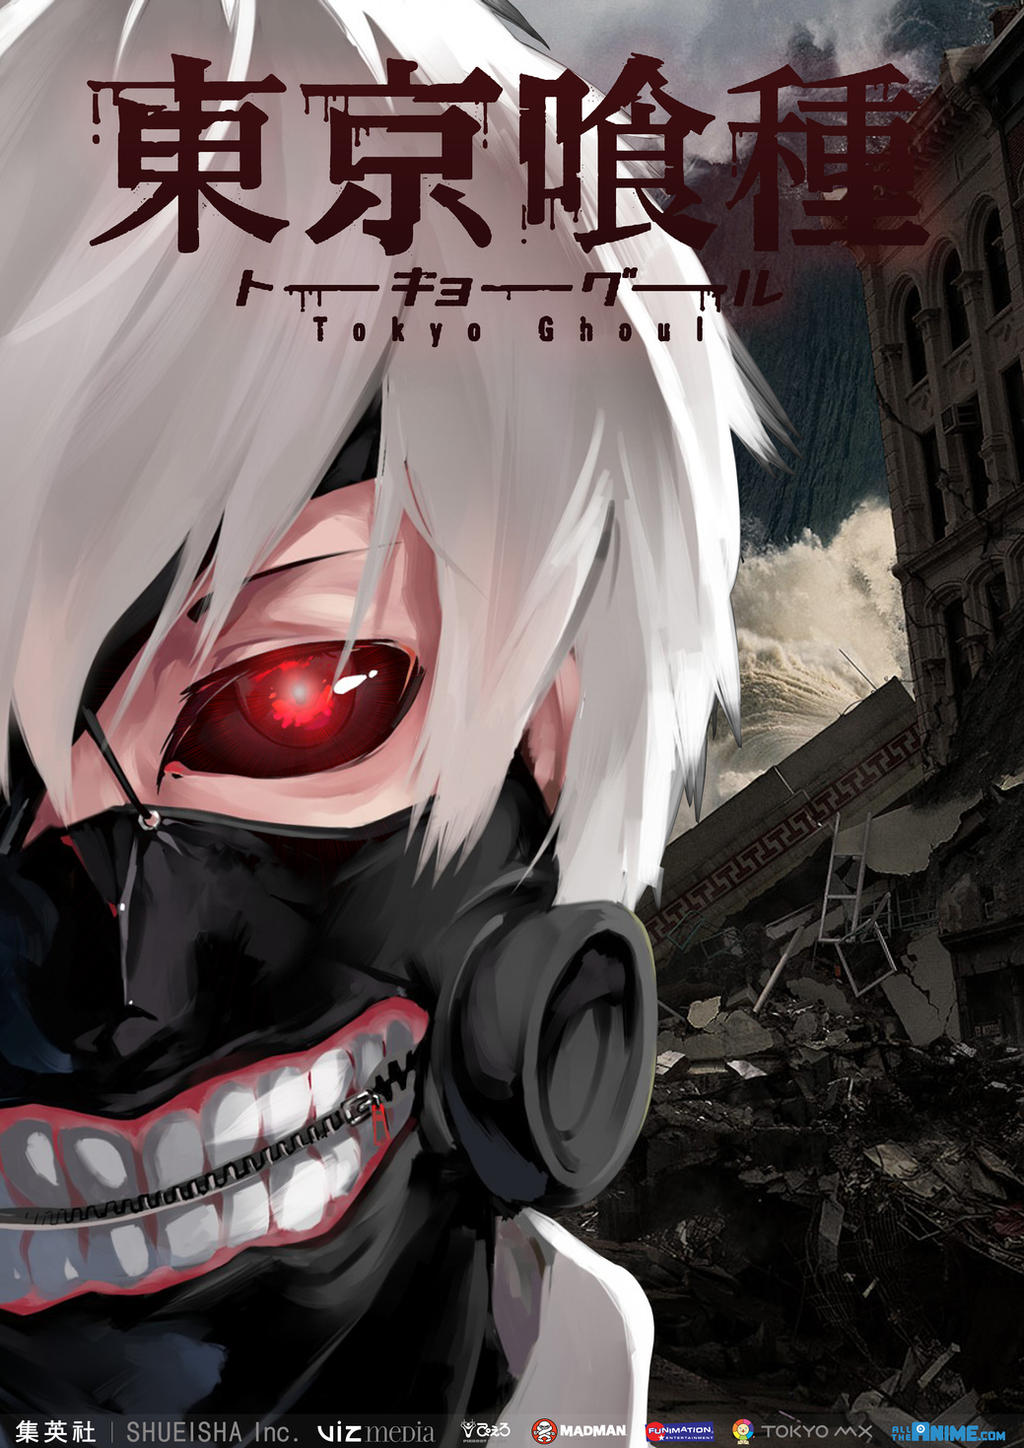 Big Poster Anime Tokyo Ghoul - Tamanho 90x60 cm - LO03